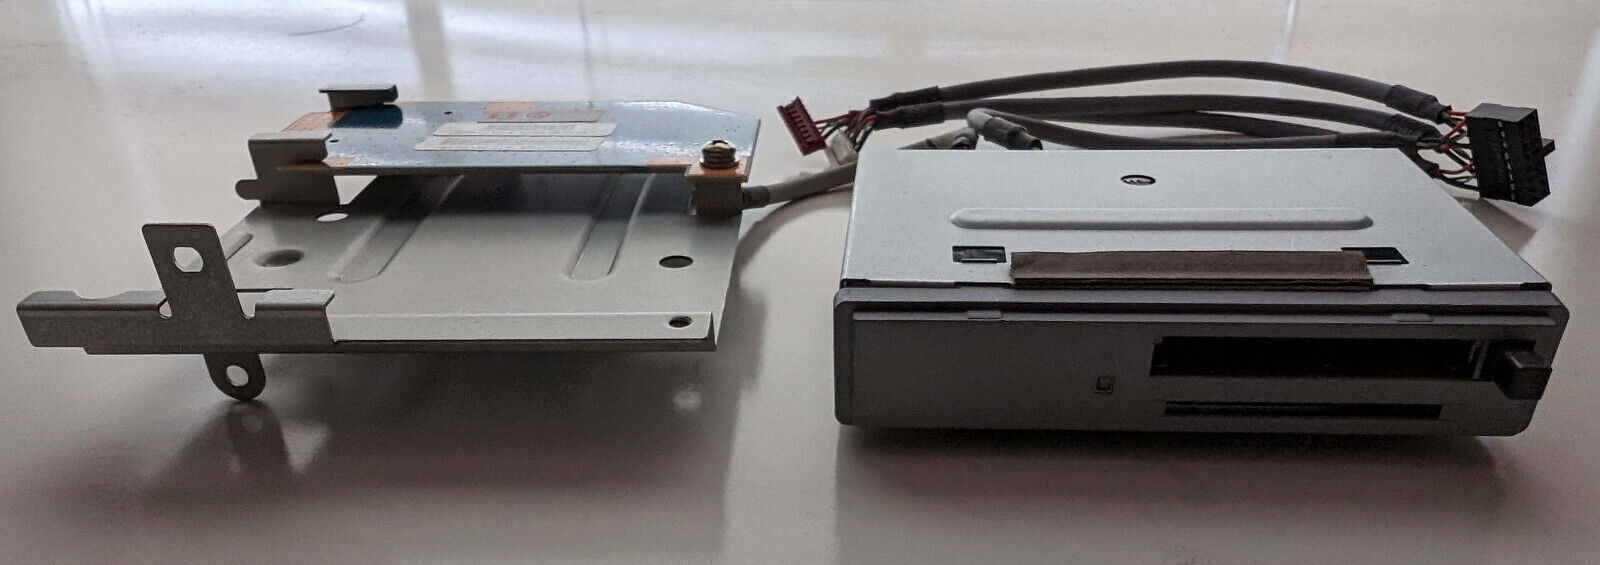 Sony Internal Multi Memory Card Reader Writer IFX-294 w/ CNX-235 Connector Board